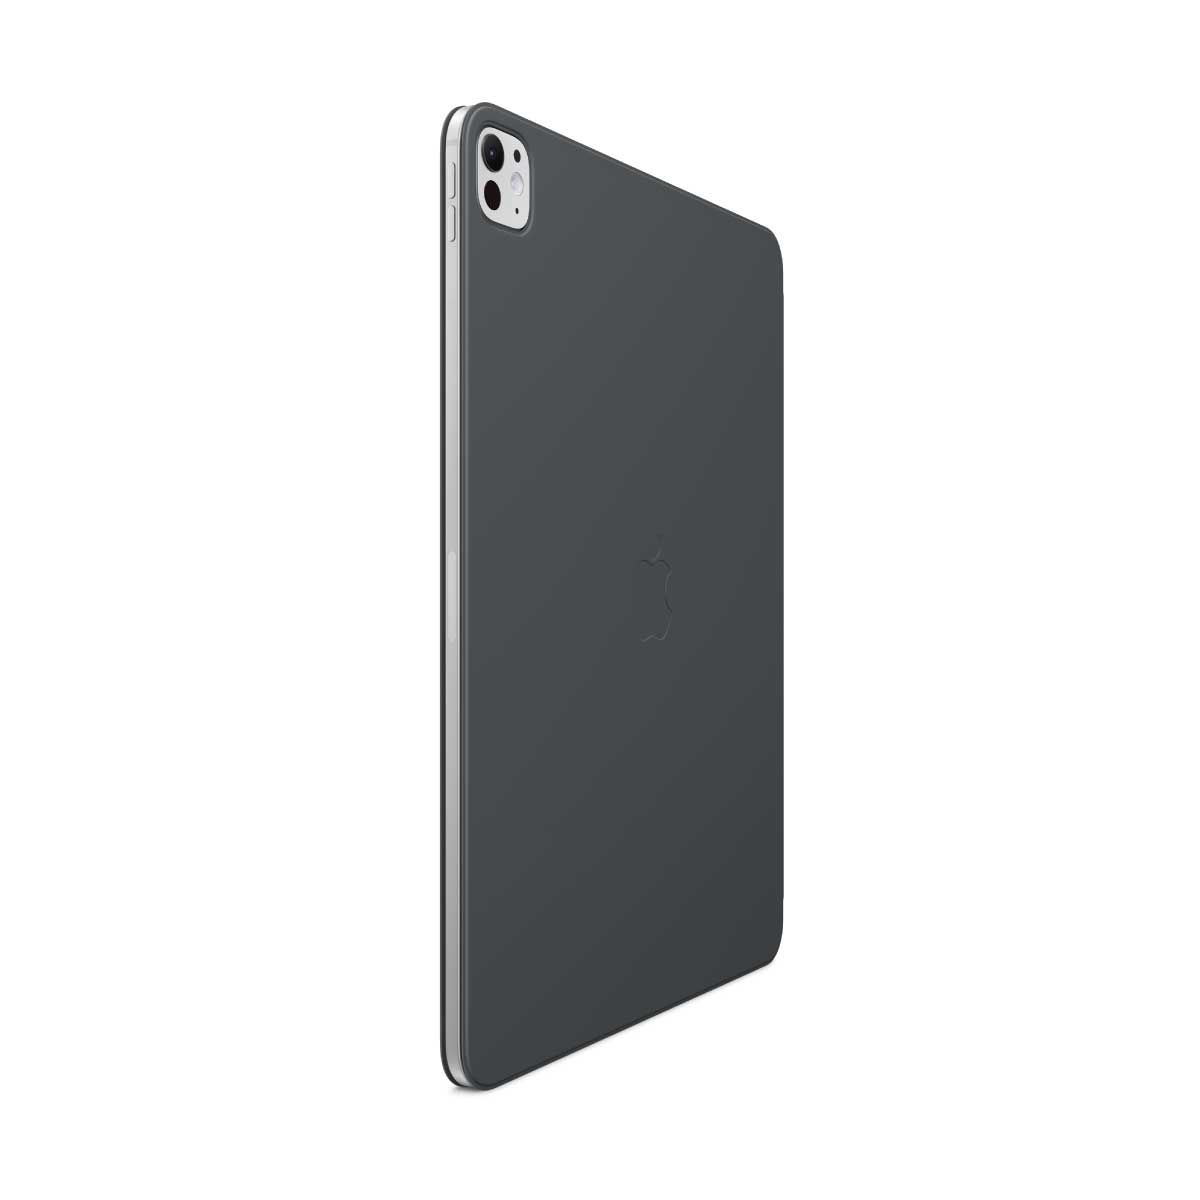 Apple Smart Folio สำหรับ iPad Pro รุ่น 13 นิ้ว (ชิป M4) - สีดำ